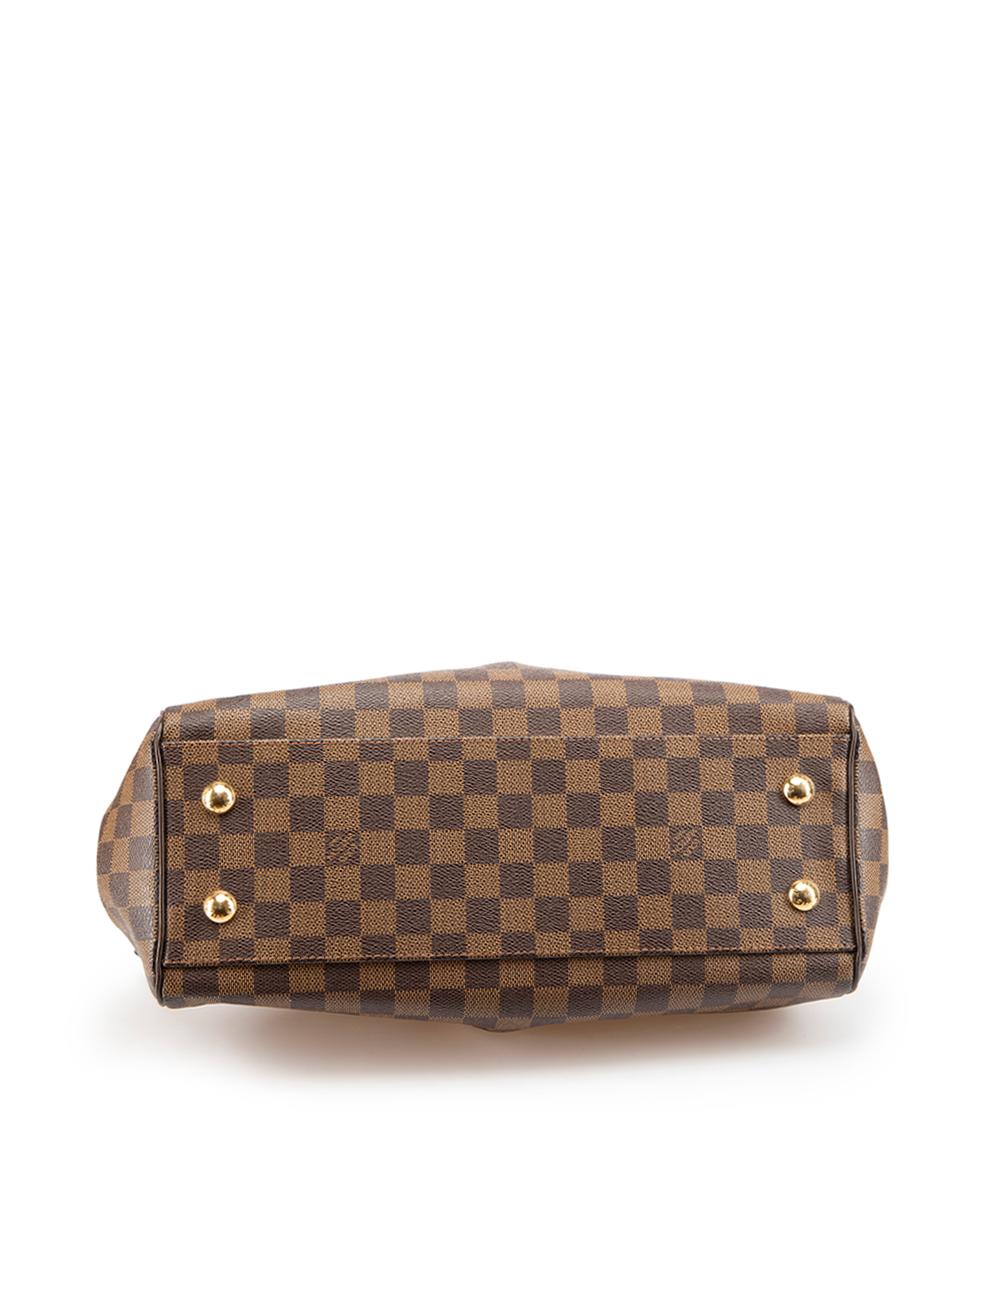 Louis Vuitton Women's Brown Damier Ebene Trevi Bag For Sale 1